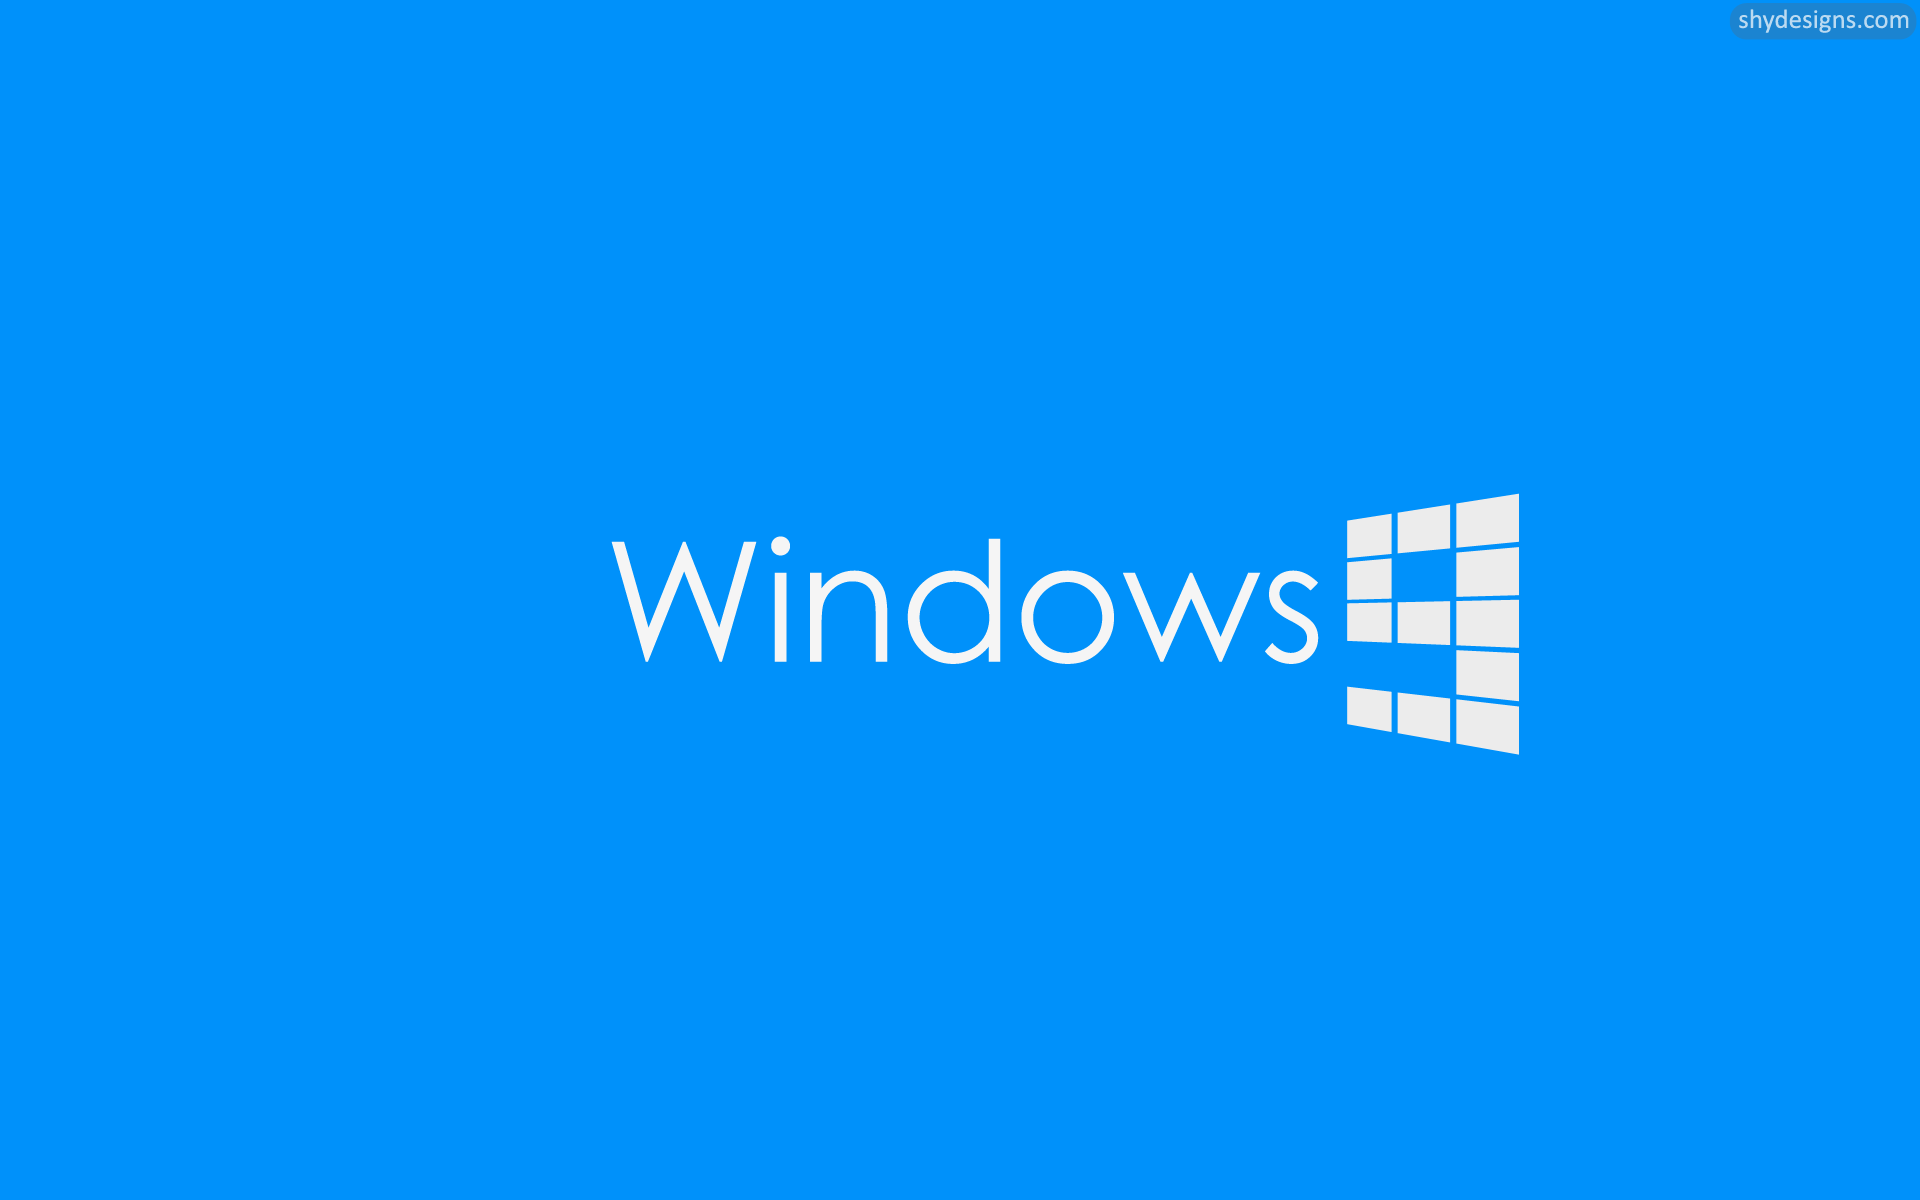 Windows 10 Dekstop Full Hd Wallpaper 5837 Wallpaper